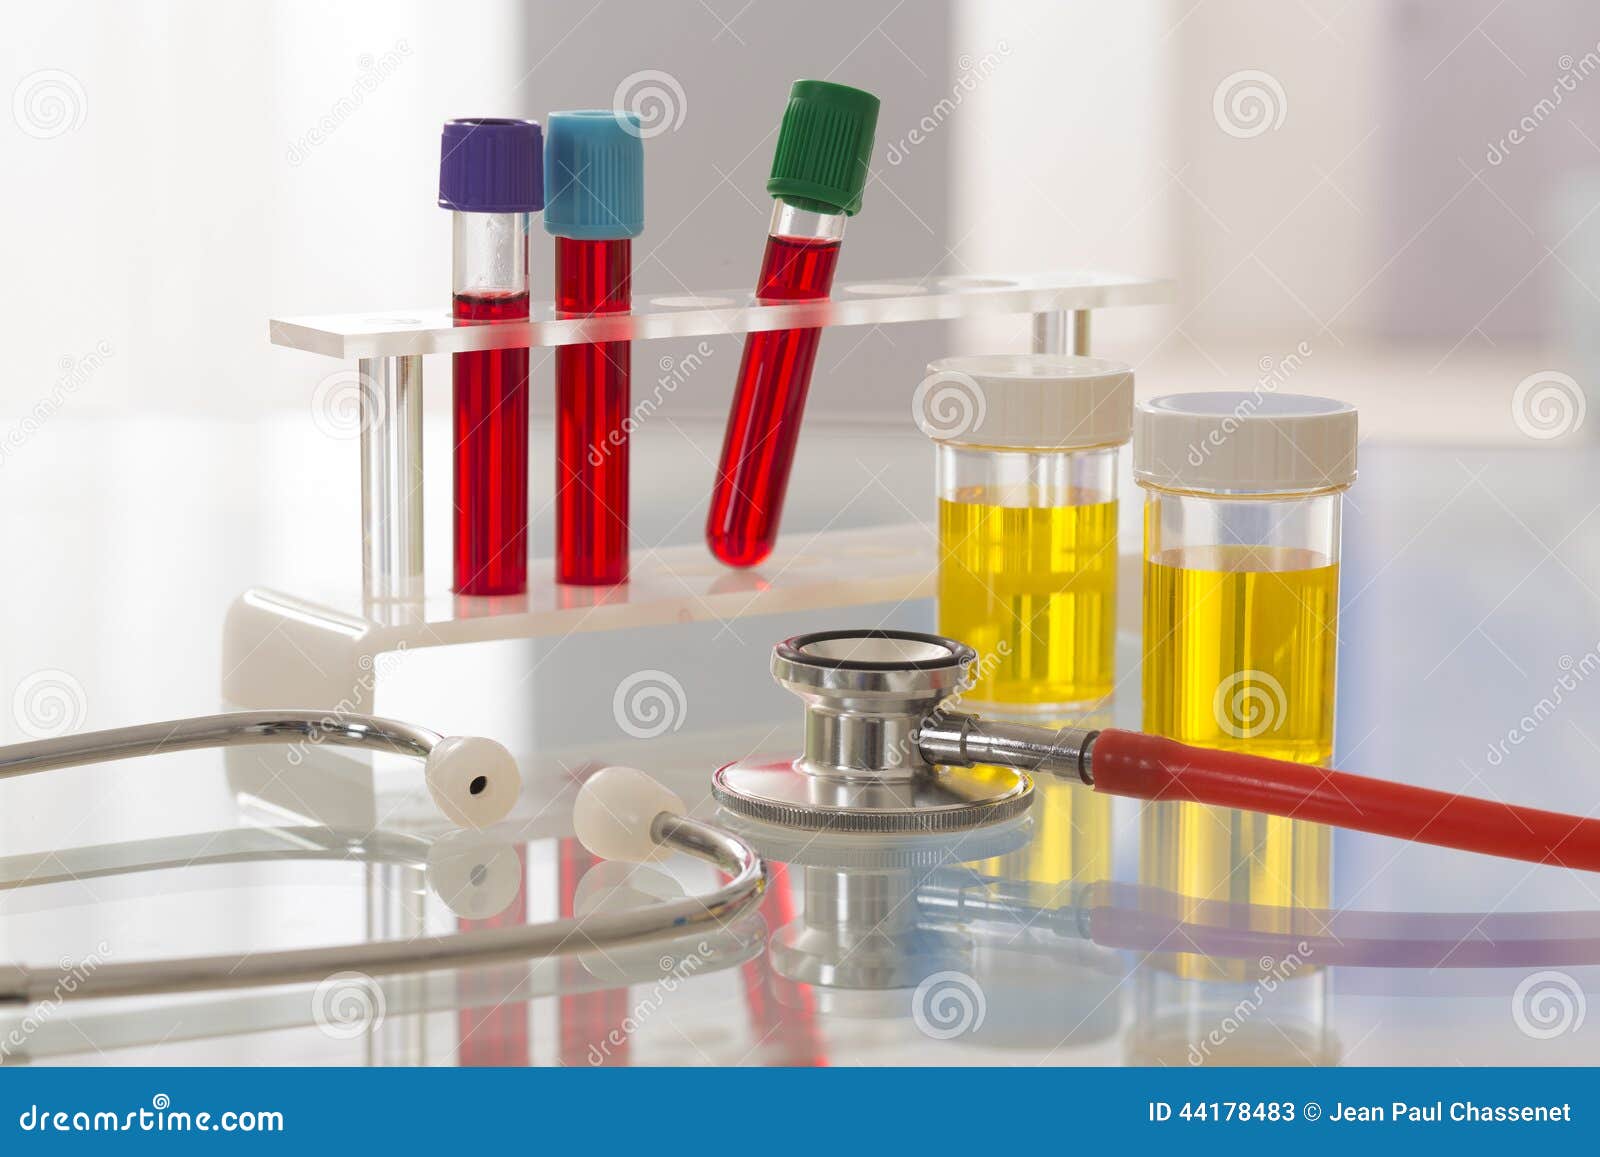 Urine Sample And Blood Test Stock Illustration - Image 